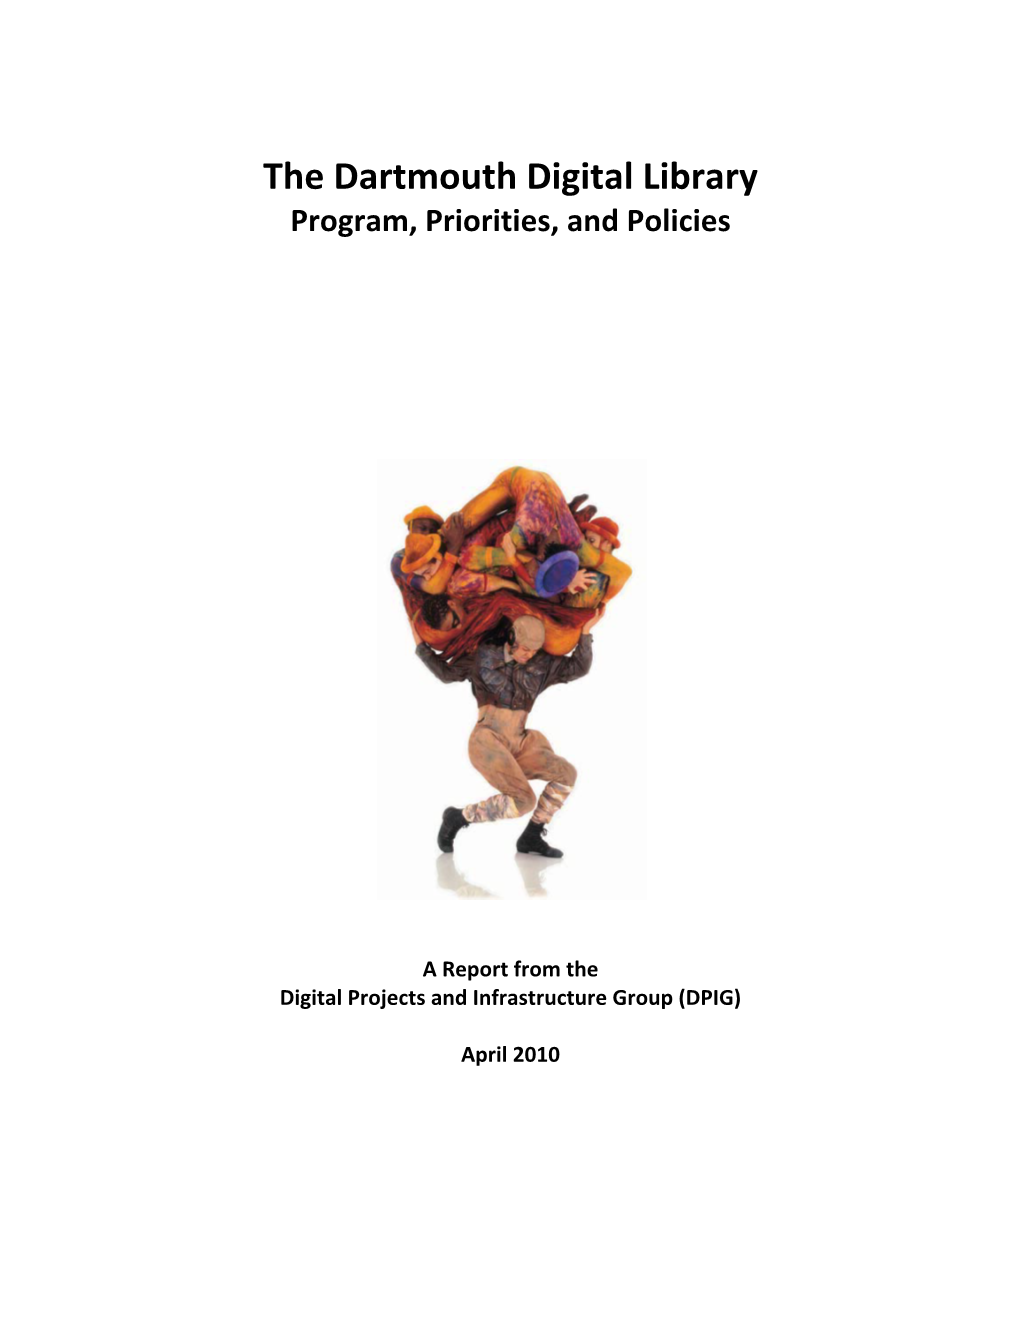 Dartmouth Digital Library: Program, Priorities, and Policies